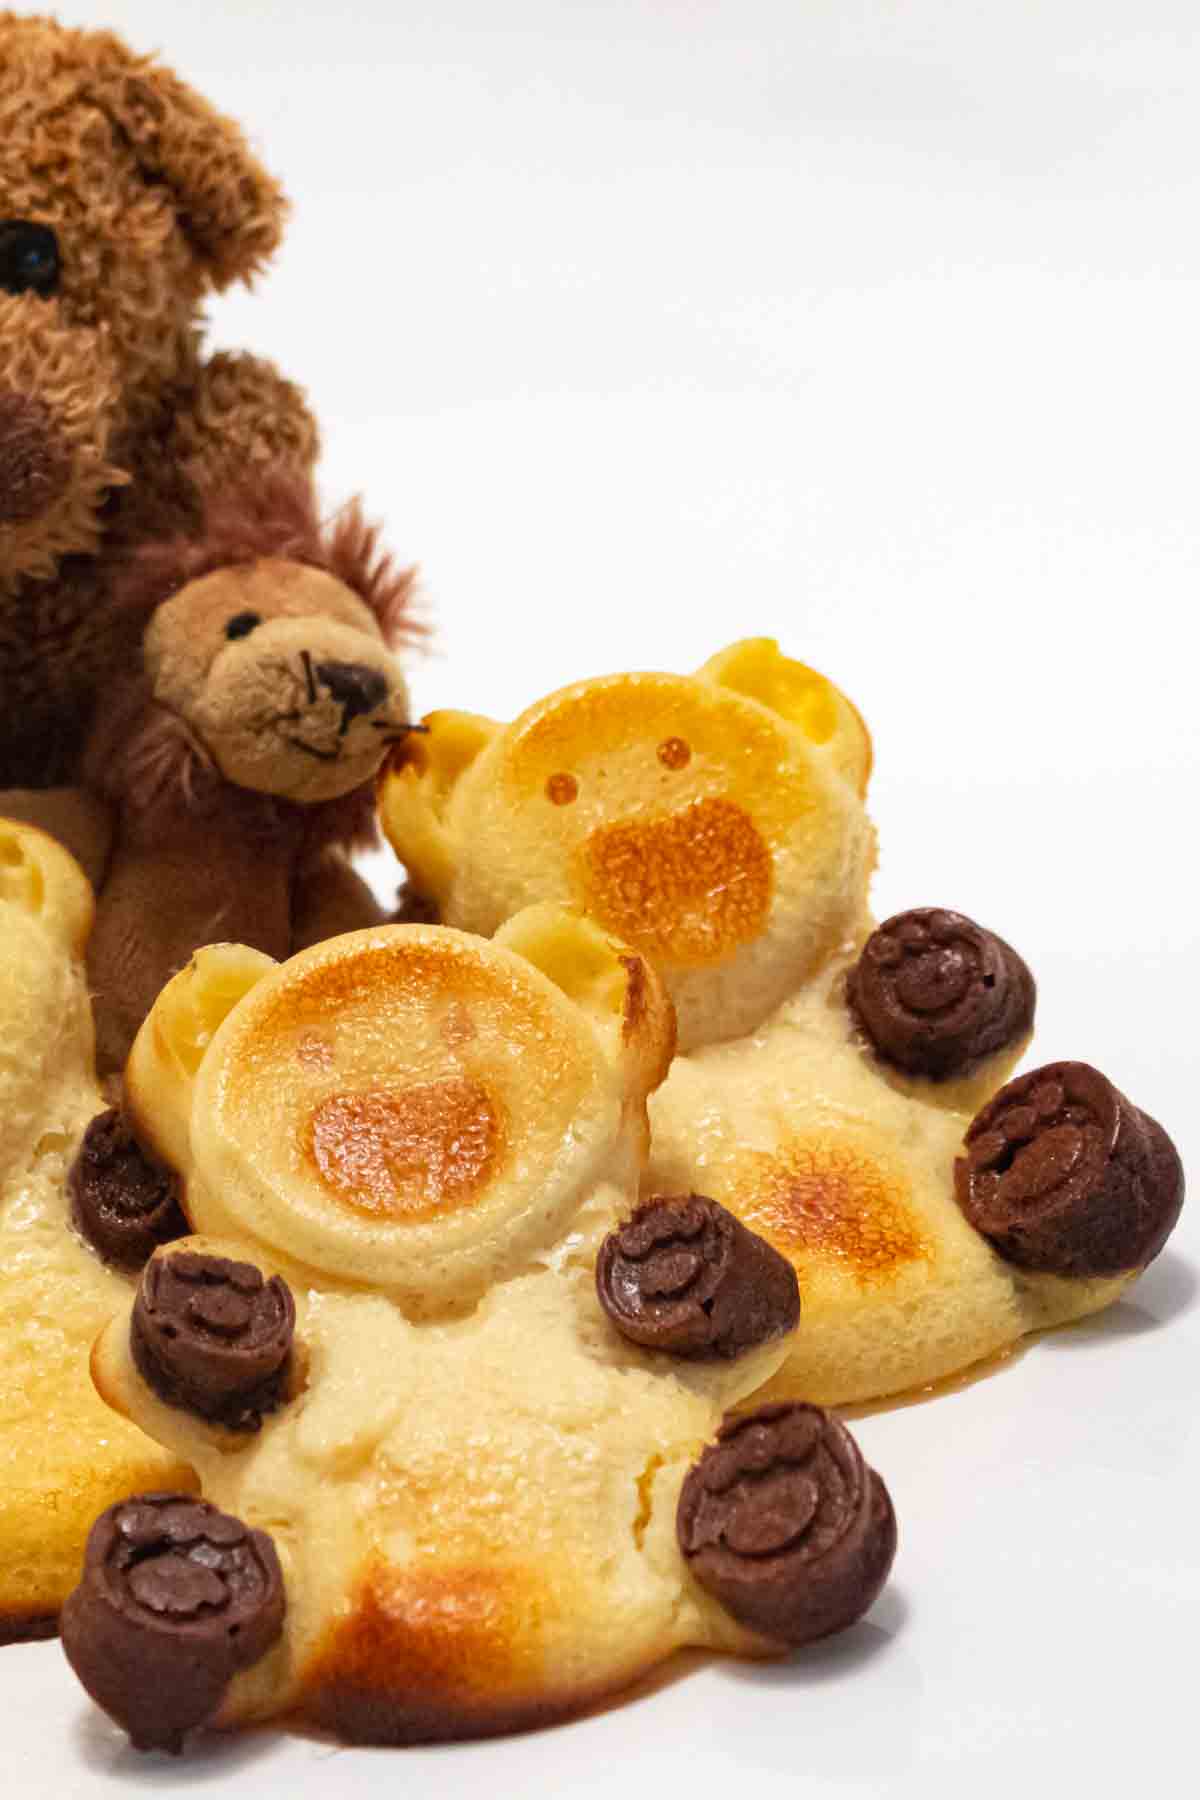 A teddy bear shaped cookie.